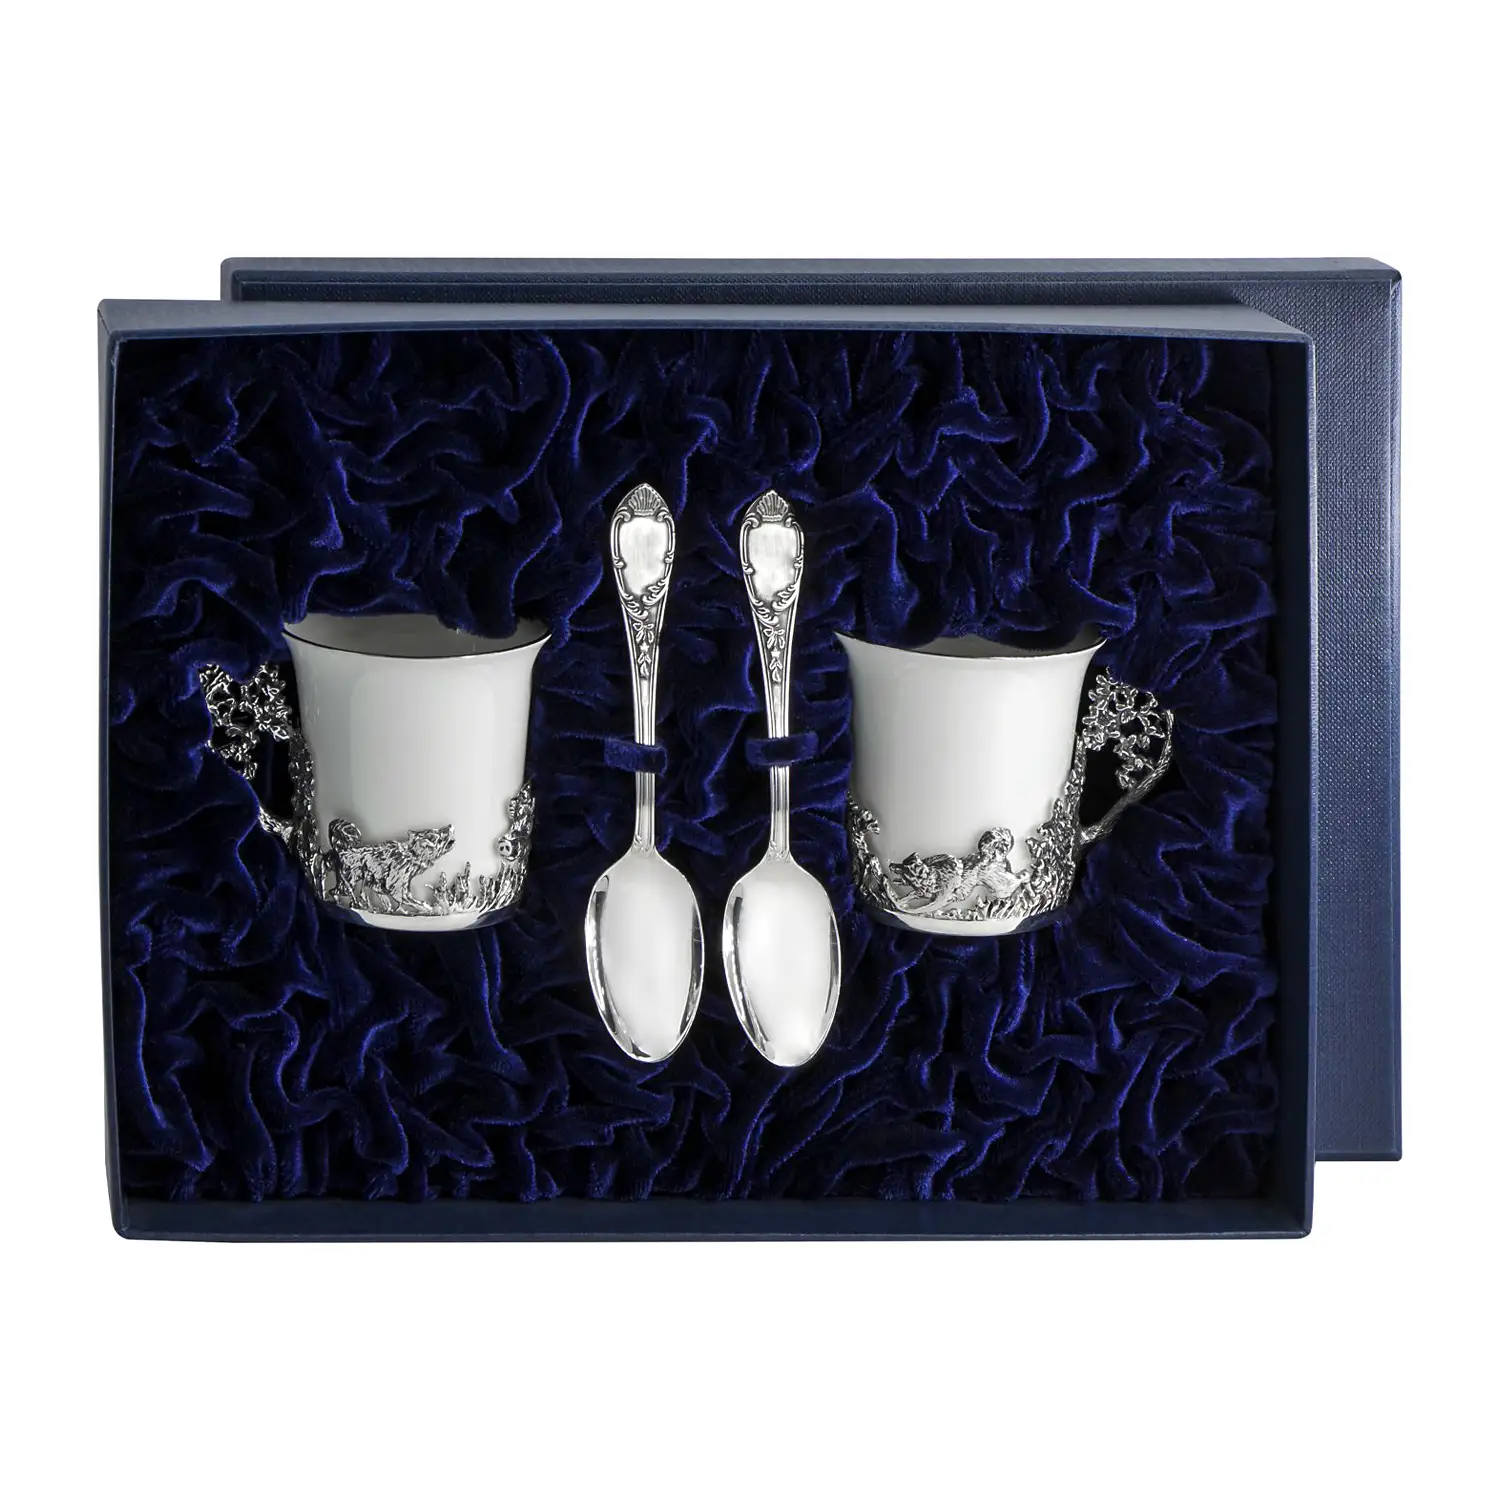 Набор кофейных чашек Кабан: ложка, чашка (Серебро 925) набор кофейных чашек сердечко ложка чашка серебро 925